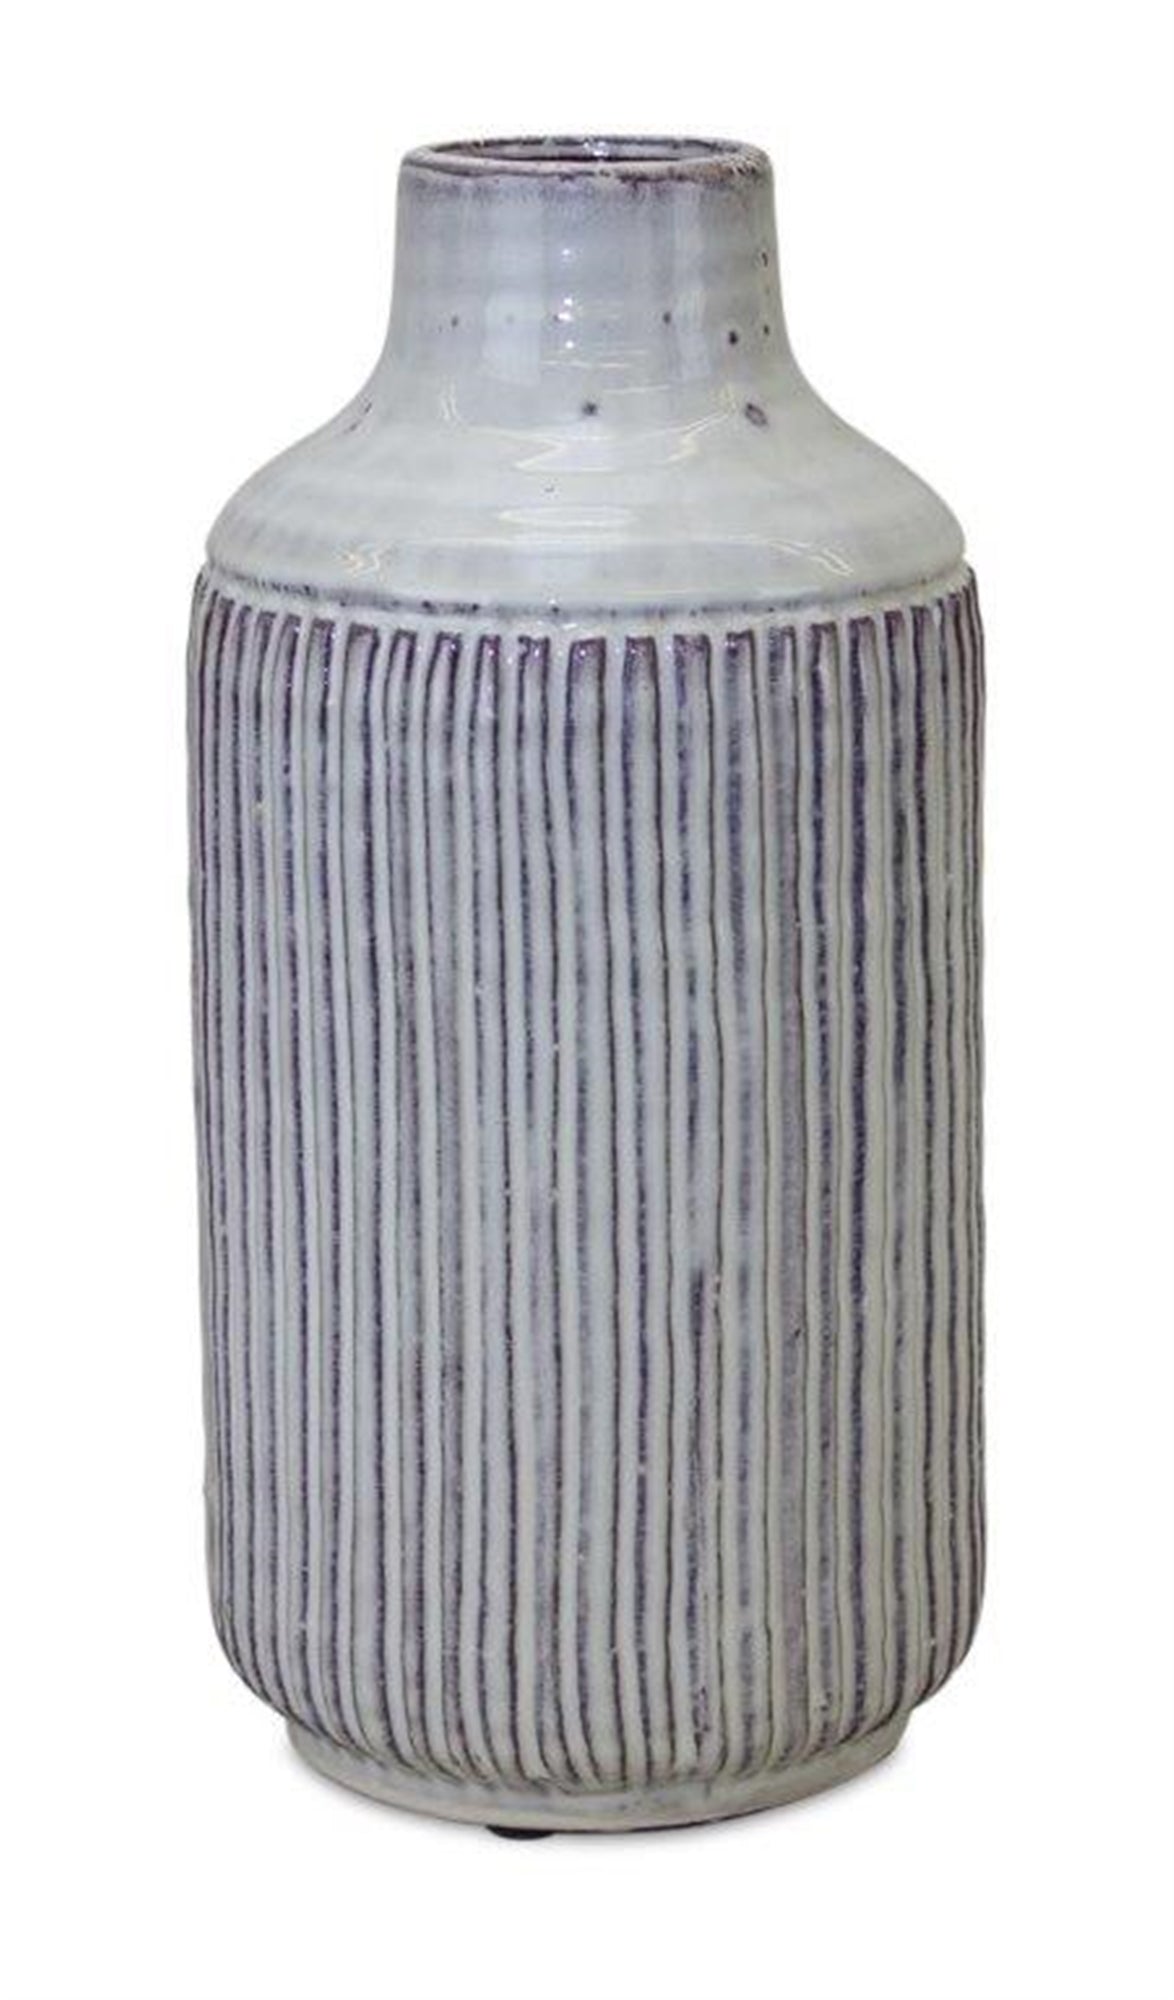 Rustic Ribbed Terra Cotta Vase 12.25"H